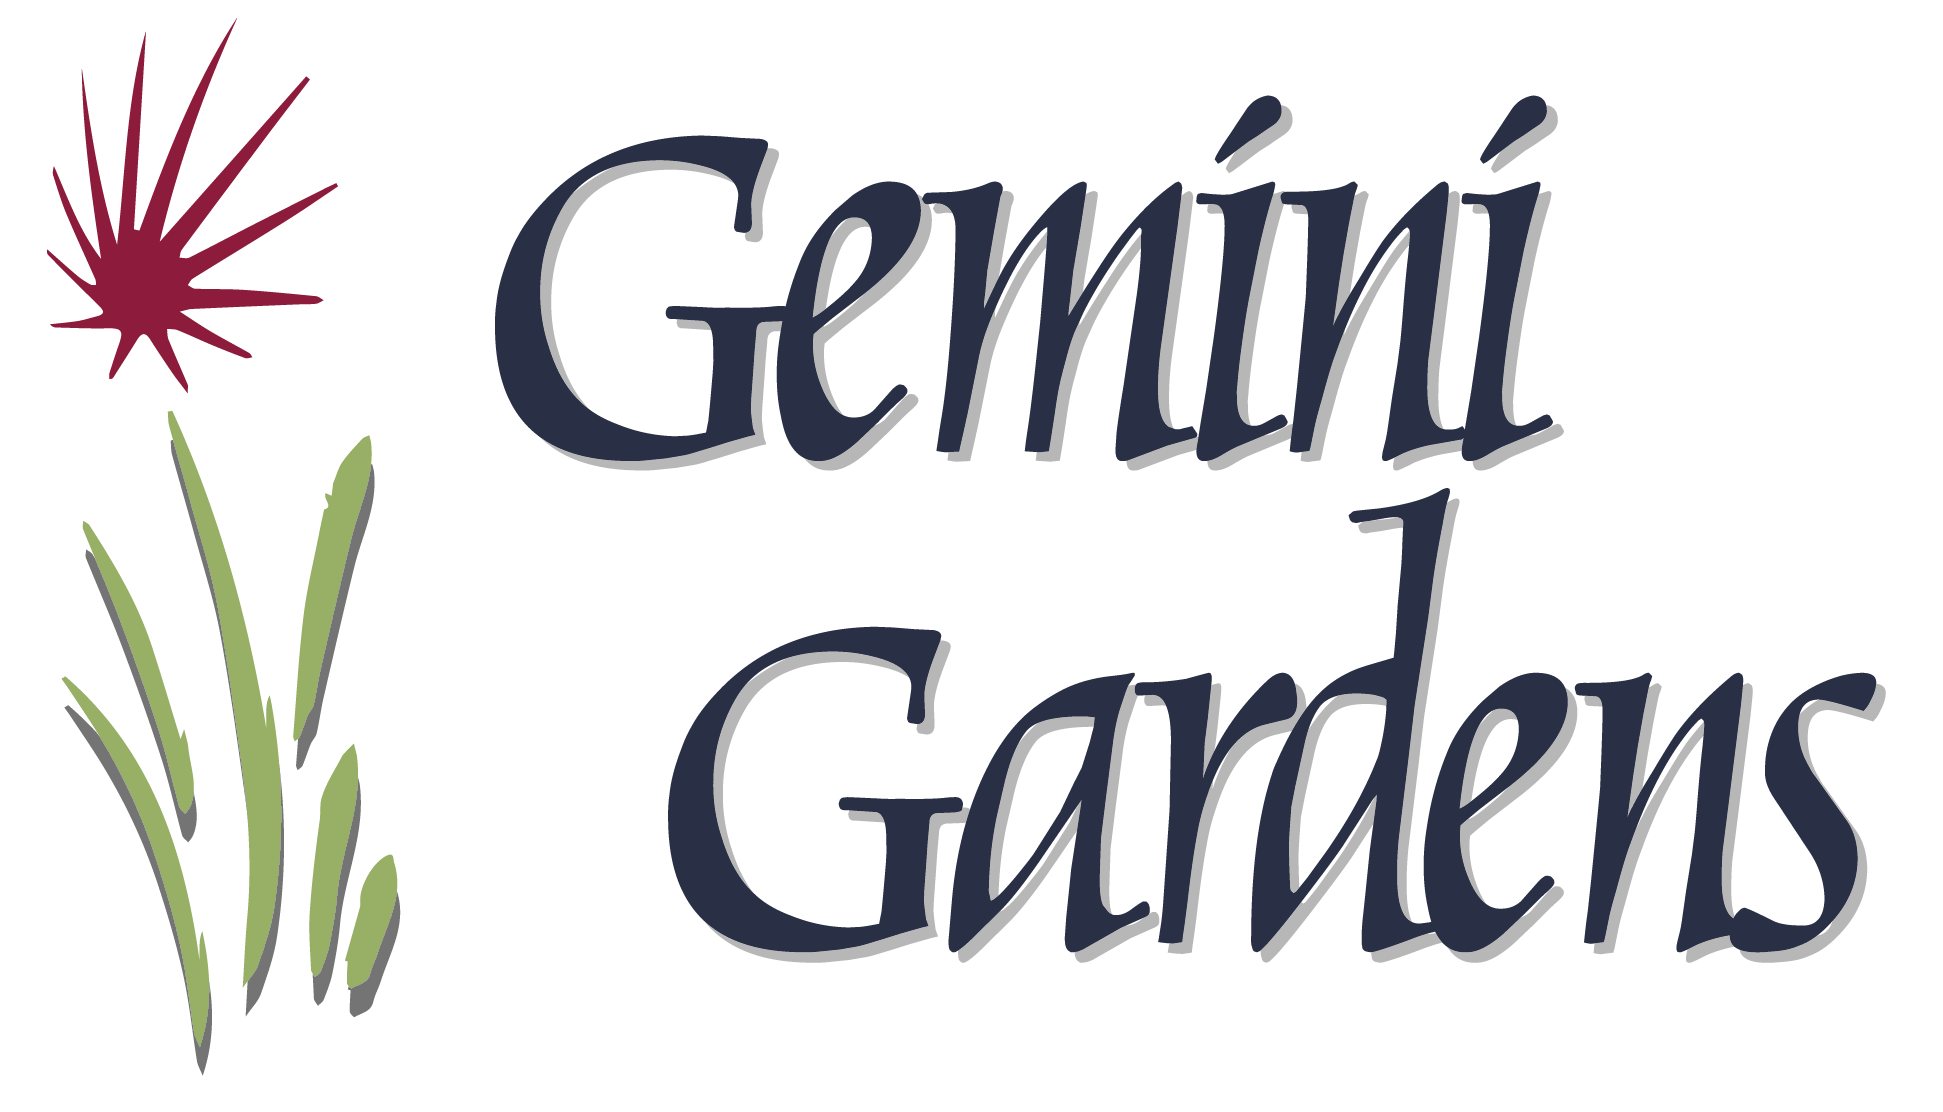 Gemini Gardens logo